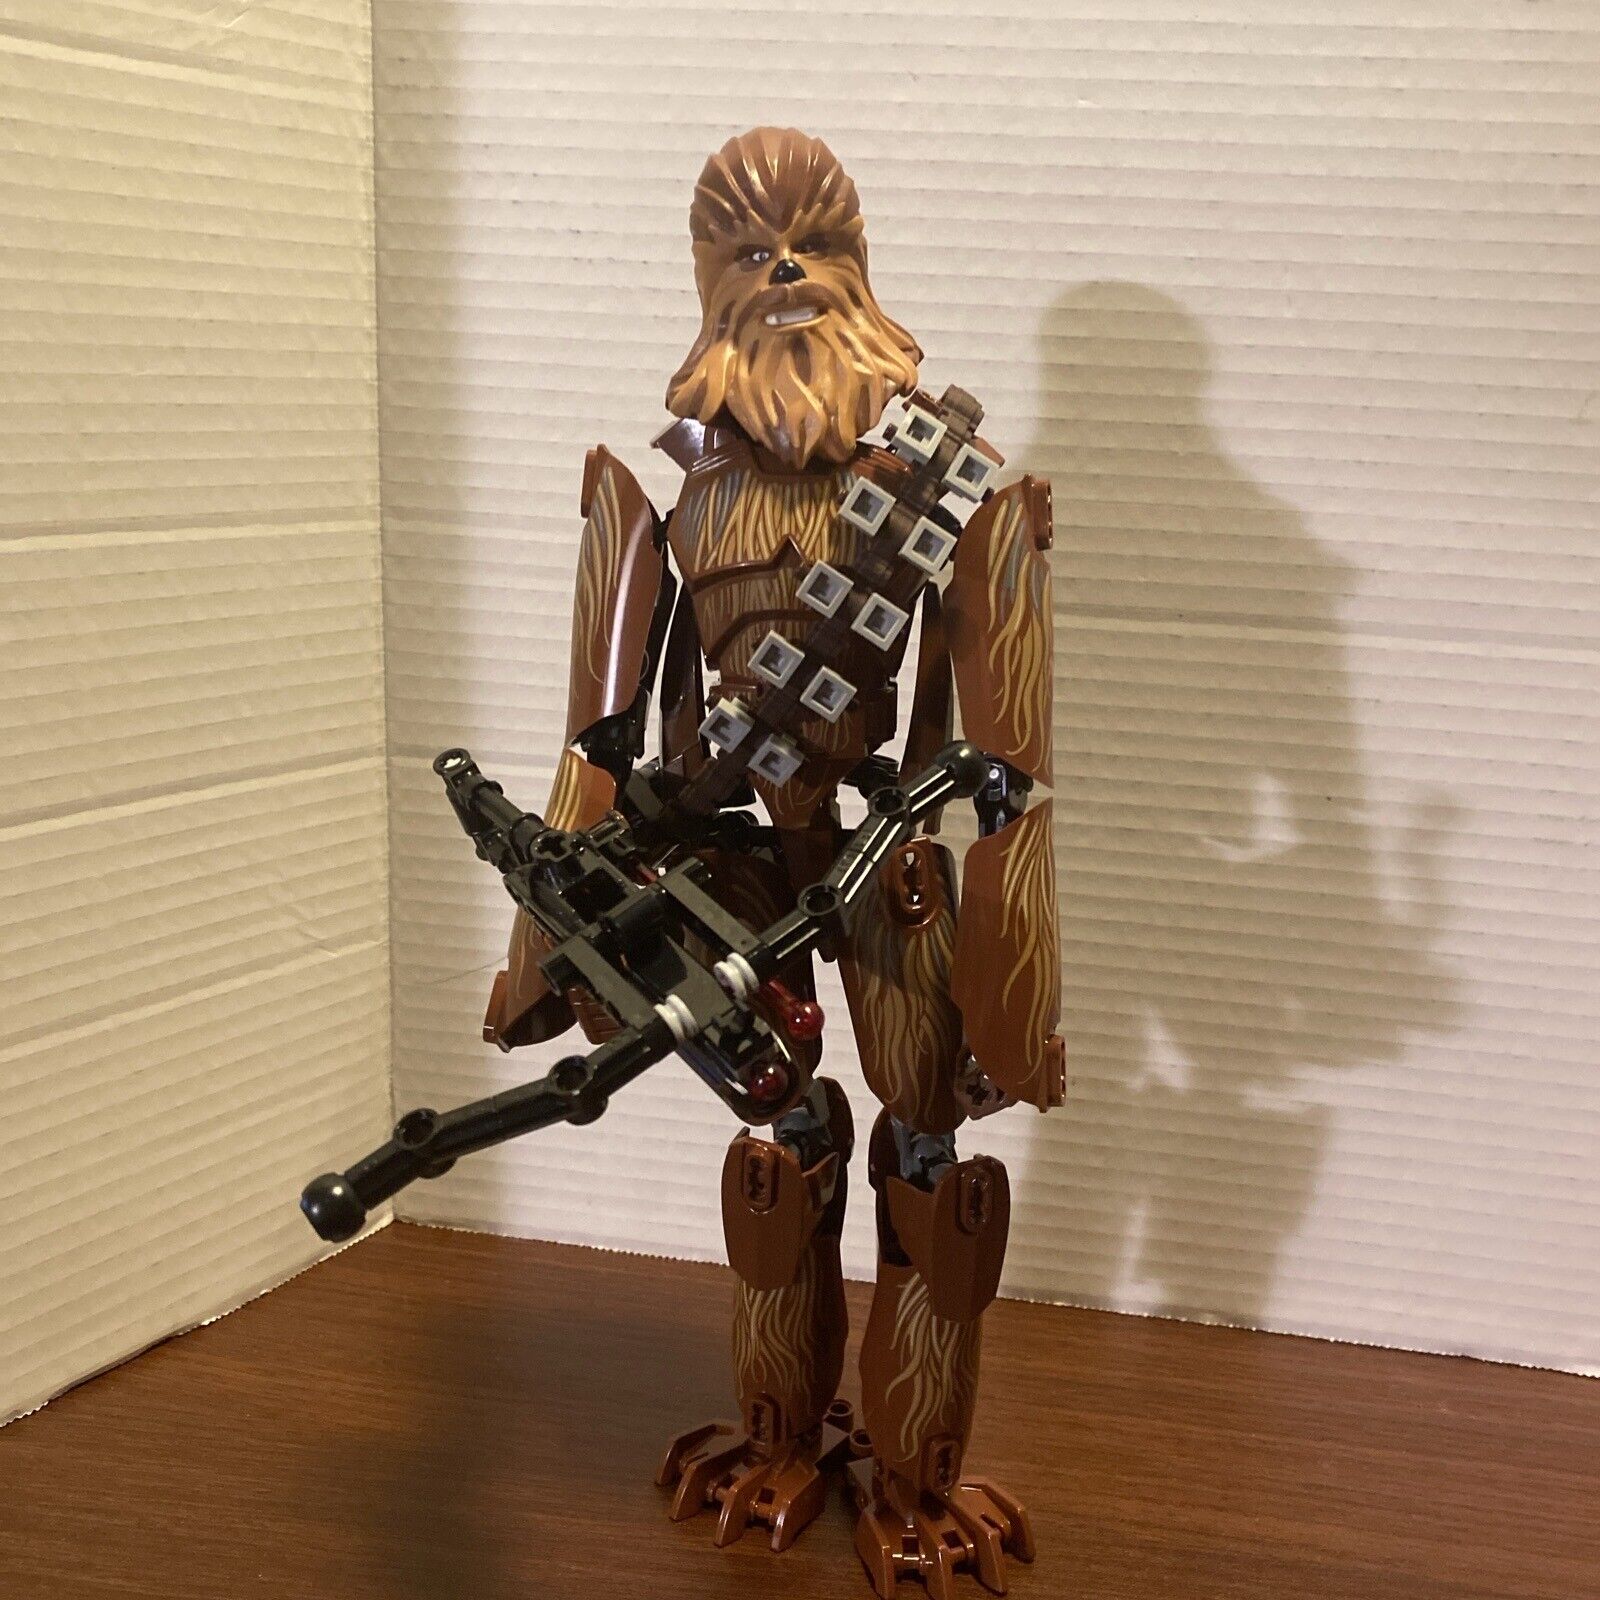 Lego Star Wars Chewbacca - 12” Tall